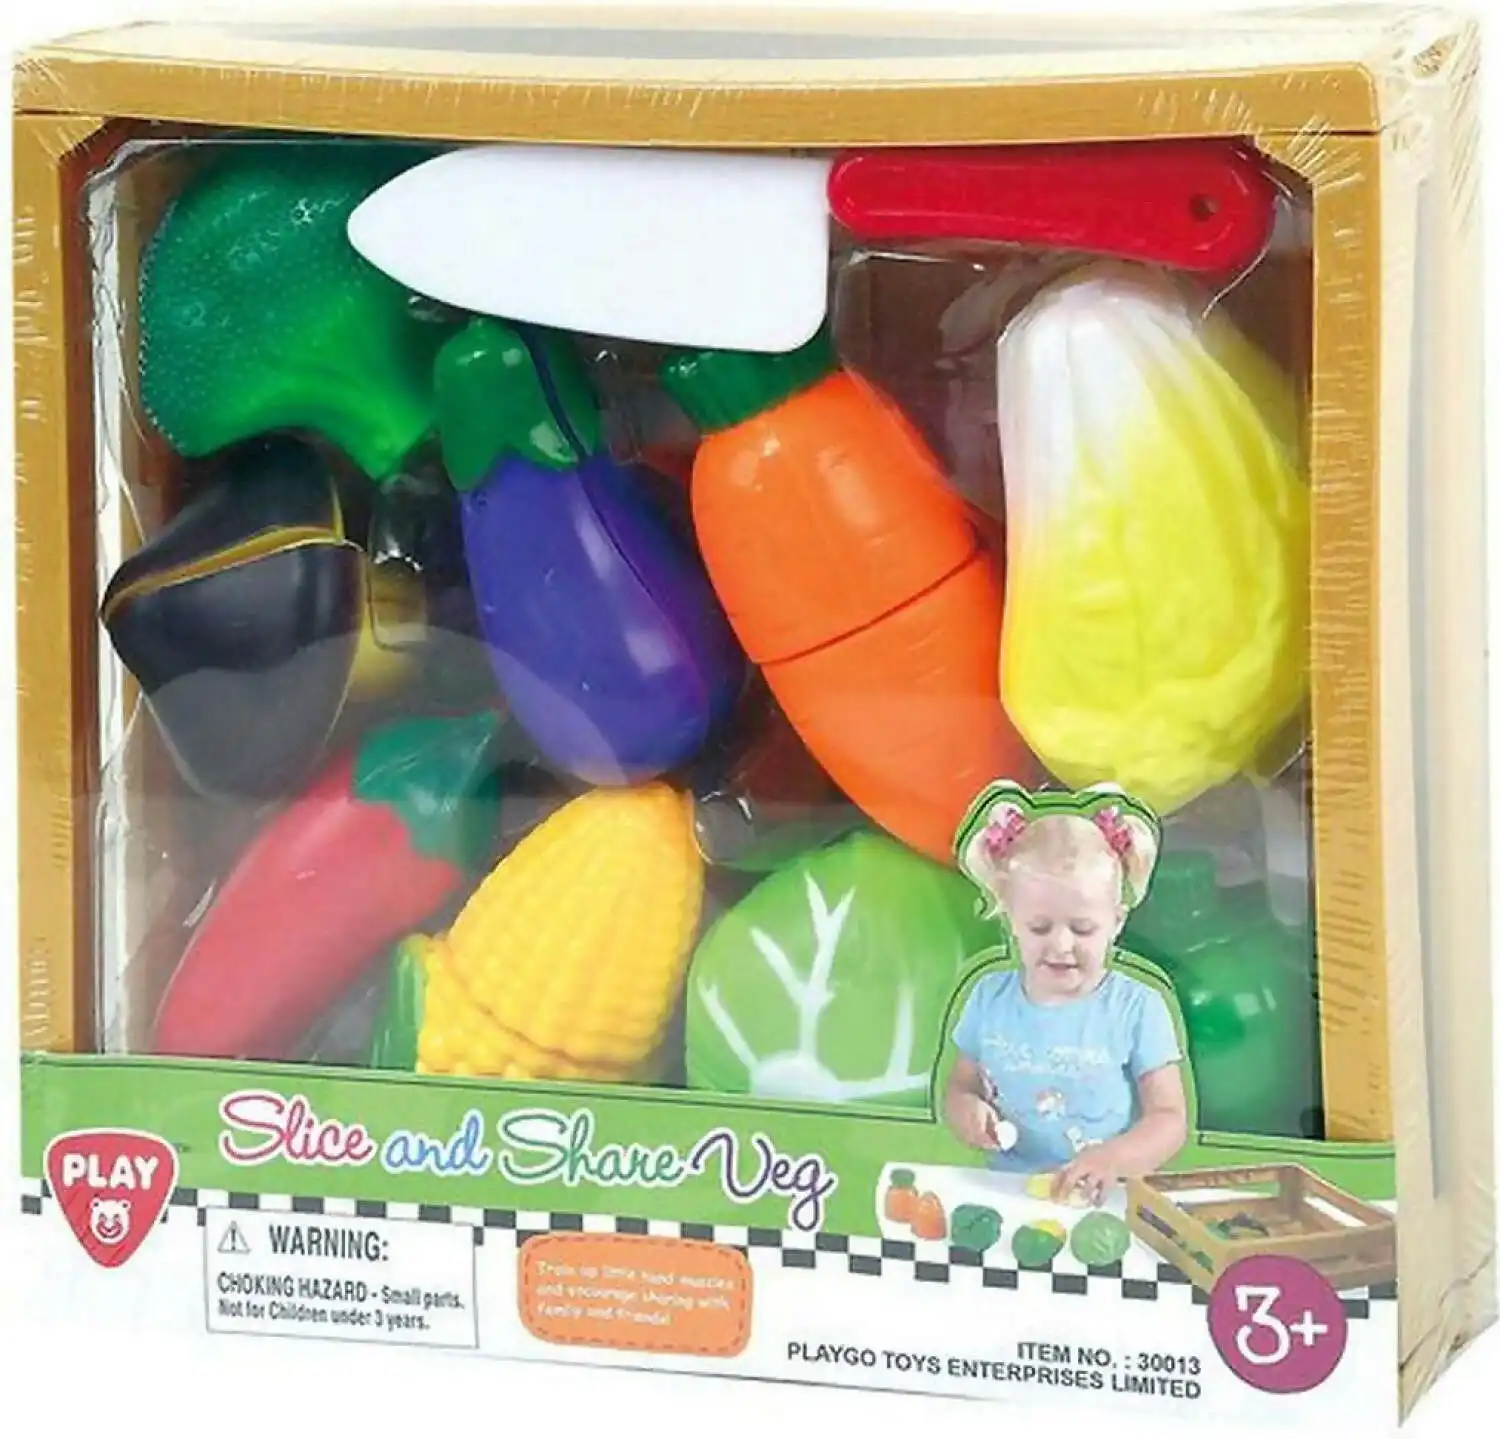 Playgo Toys Ent. Ltd. - Slice & Share Veg 11 Piece